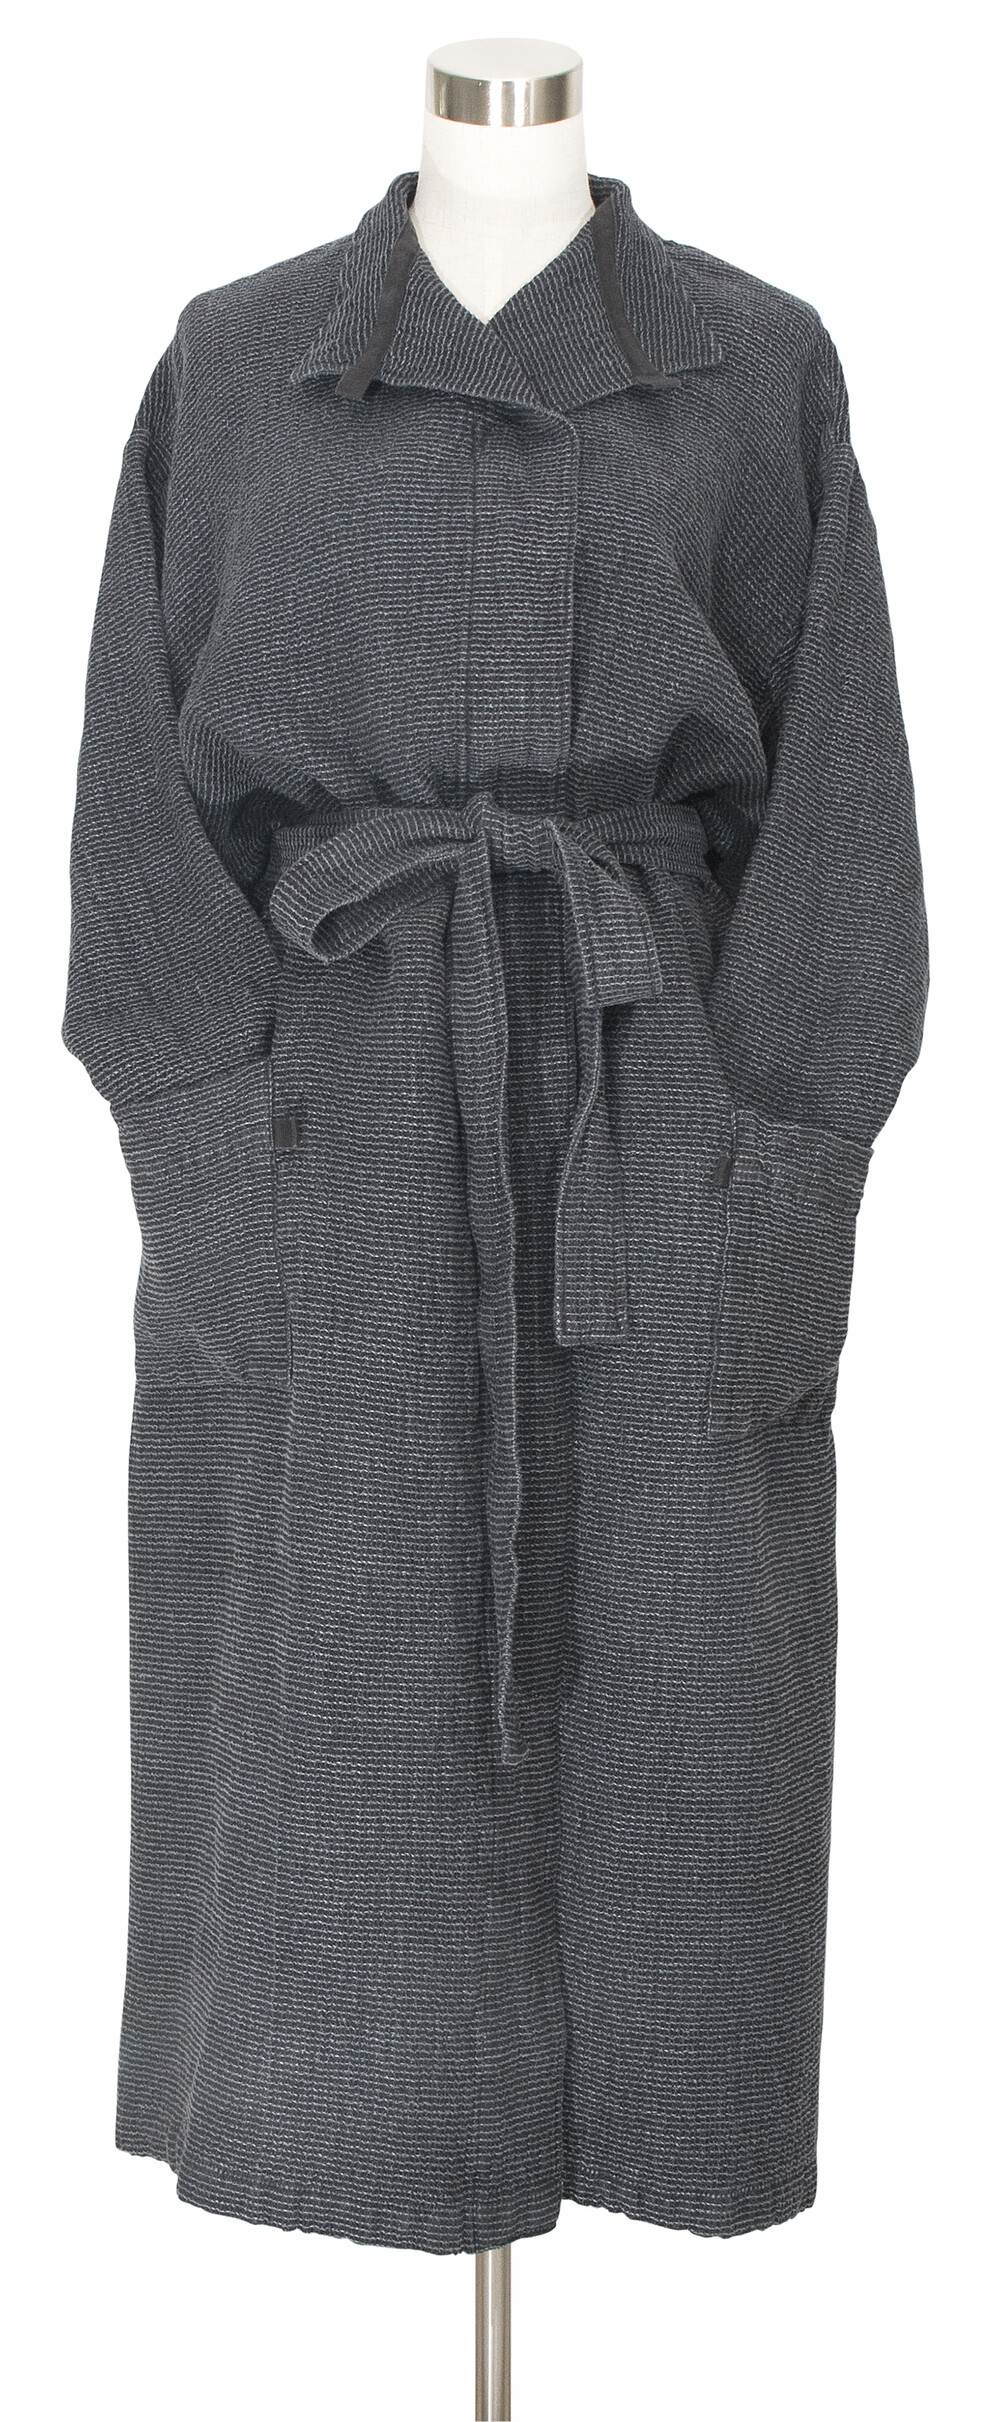 TERVA bathrobe | Lapuan Kankurit